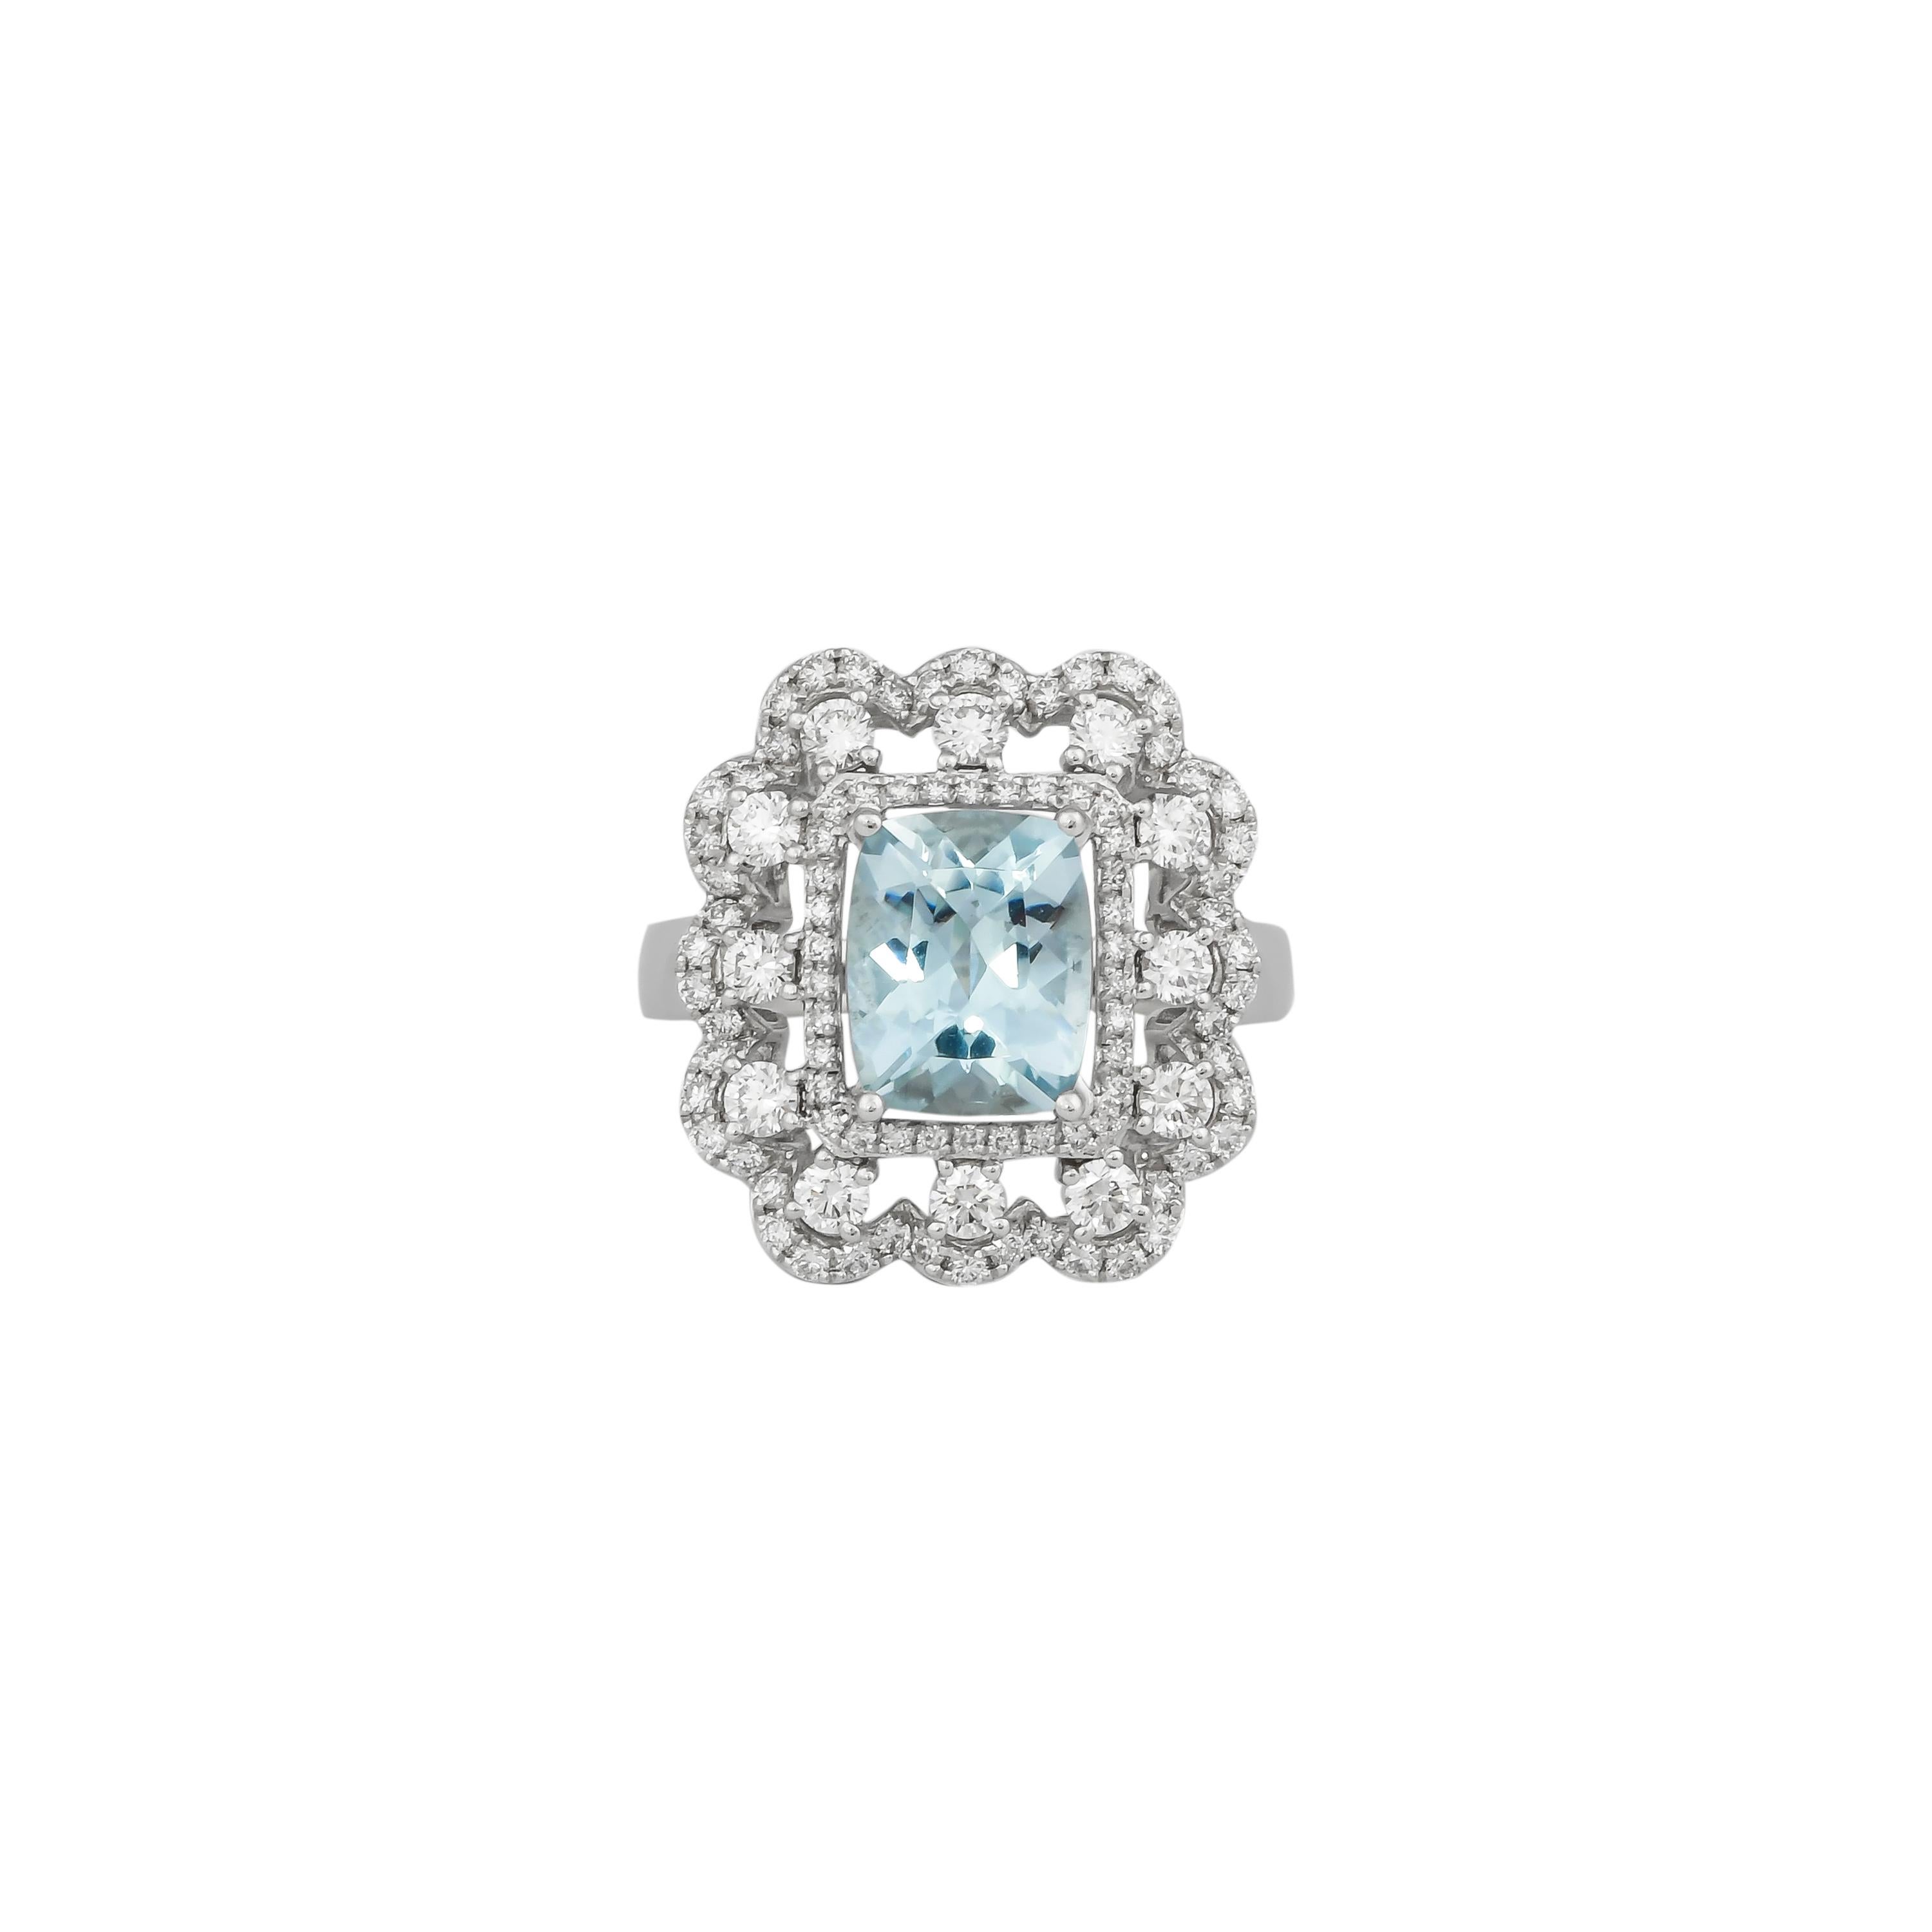 Cushion Cut 2.59 Carat Aquamarine and Diamond Ring in 18 Karat White Gold For Sale